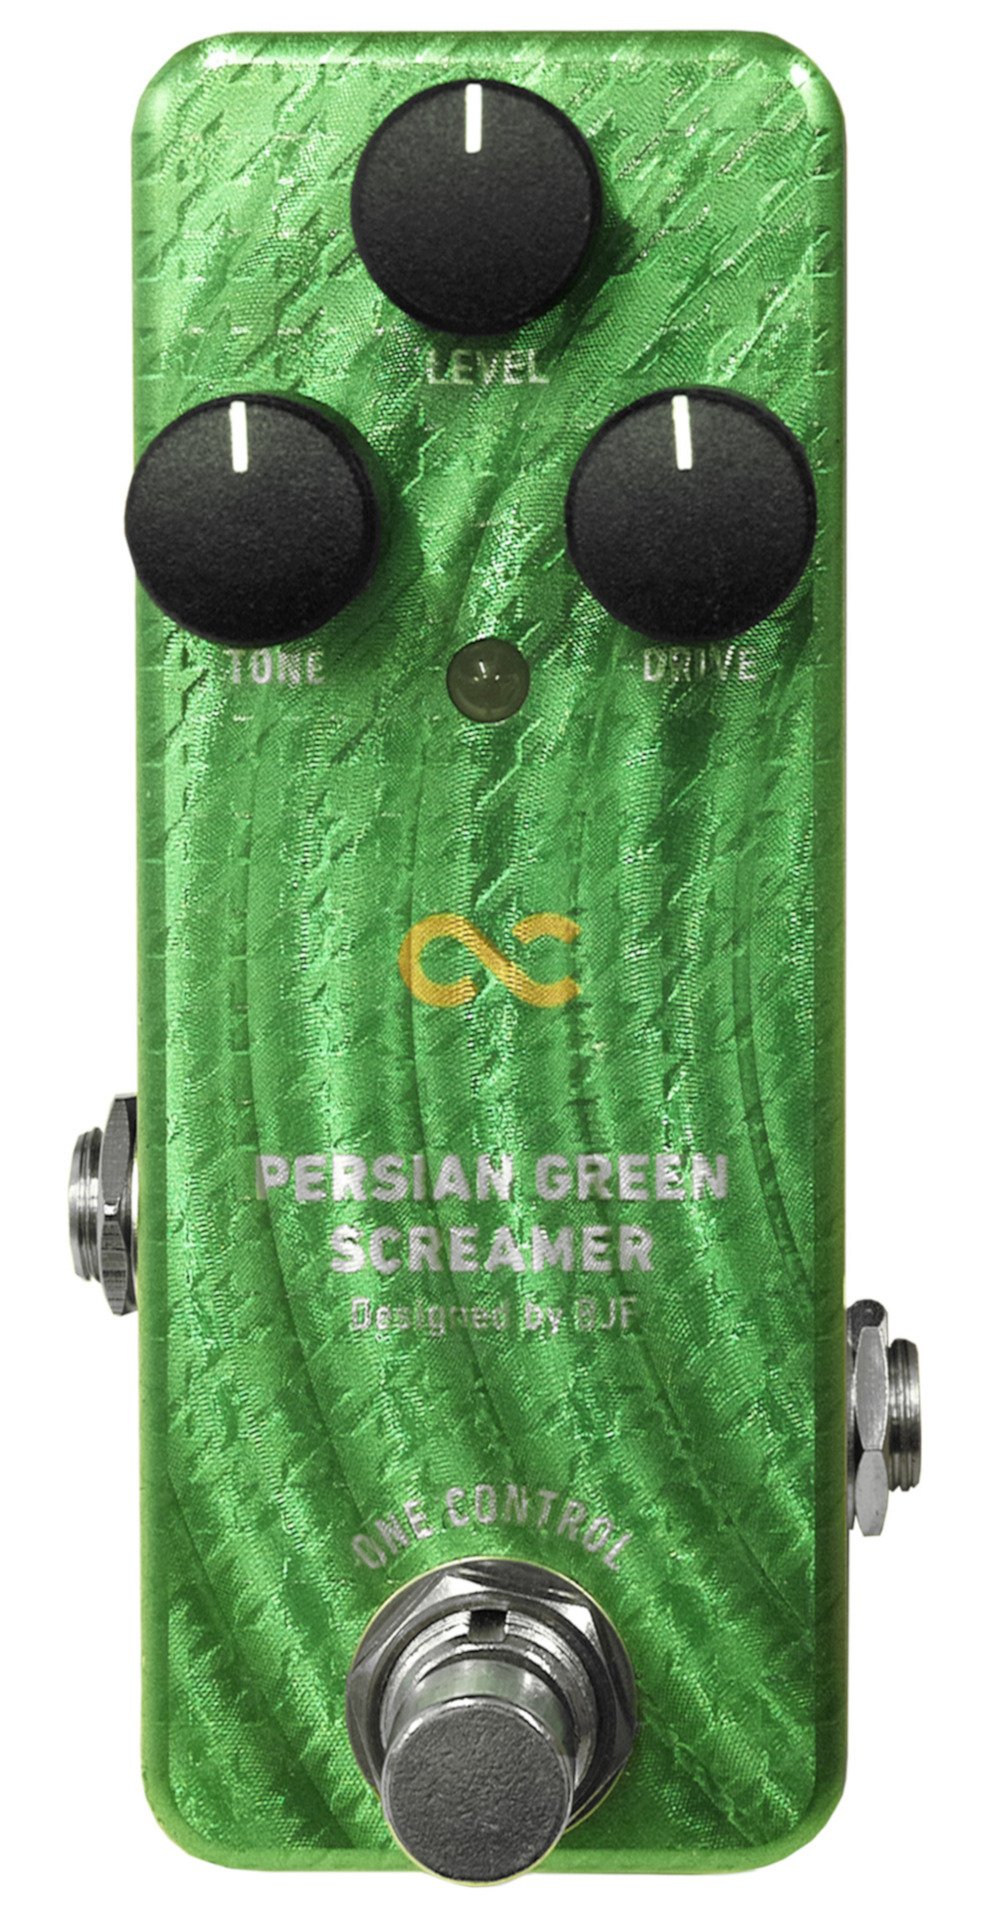 One Control Persian Green Screamer - Overdrive